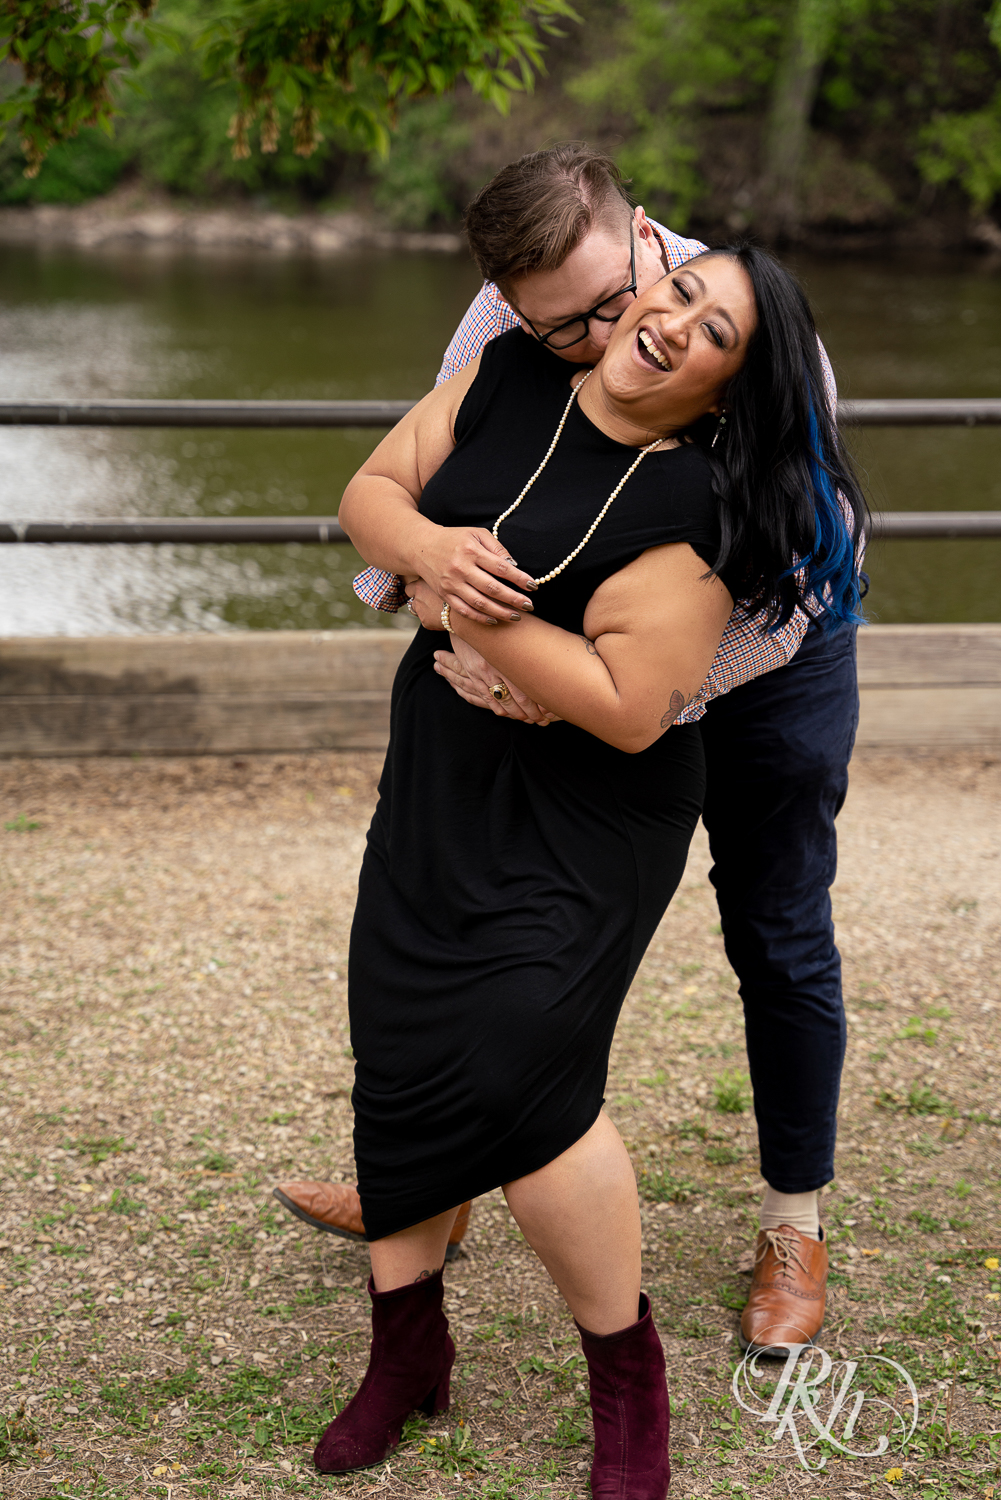 Man and Filipino woman laugh on Nicollet Island in Minneapolis, Minnesota.